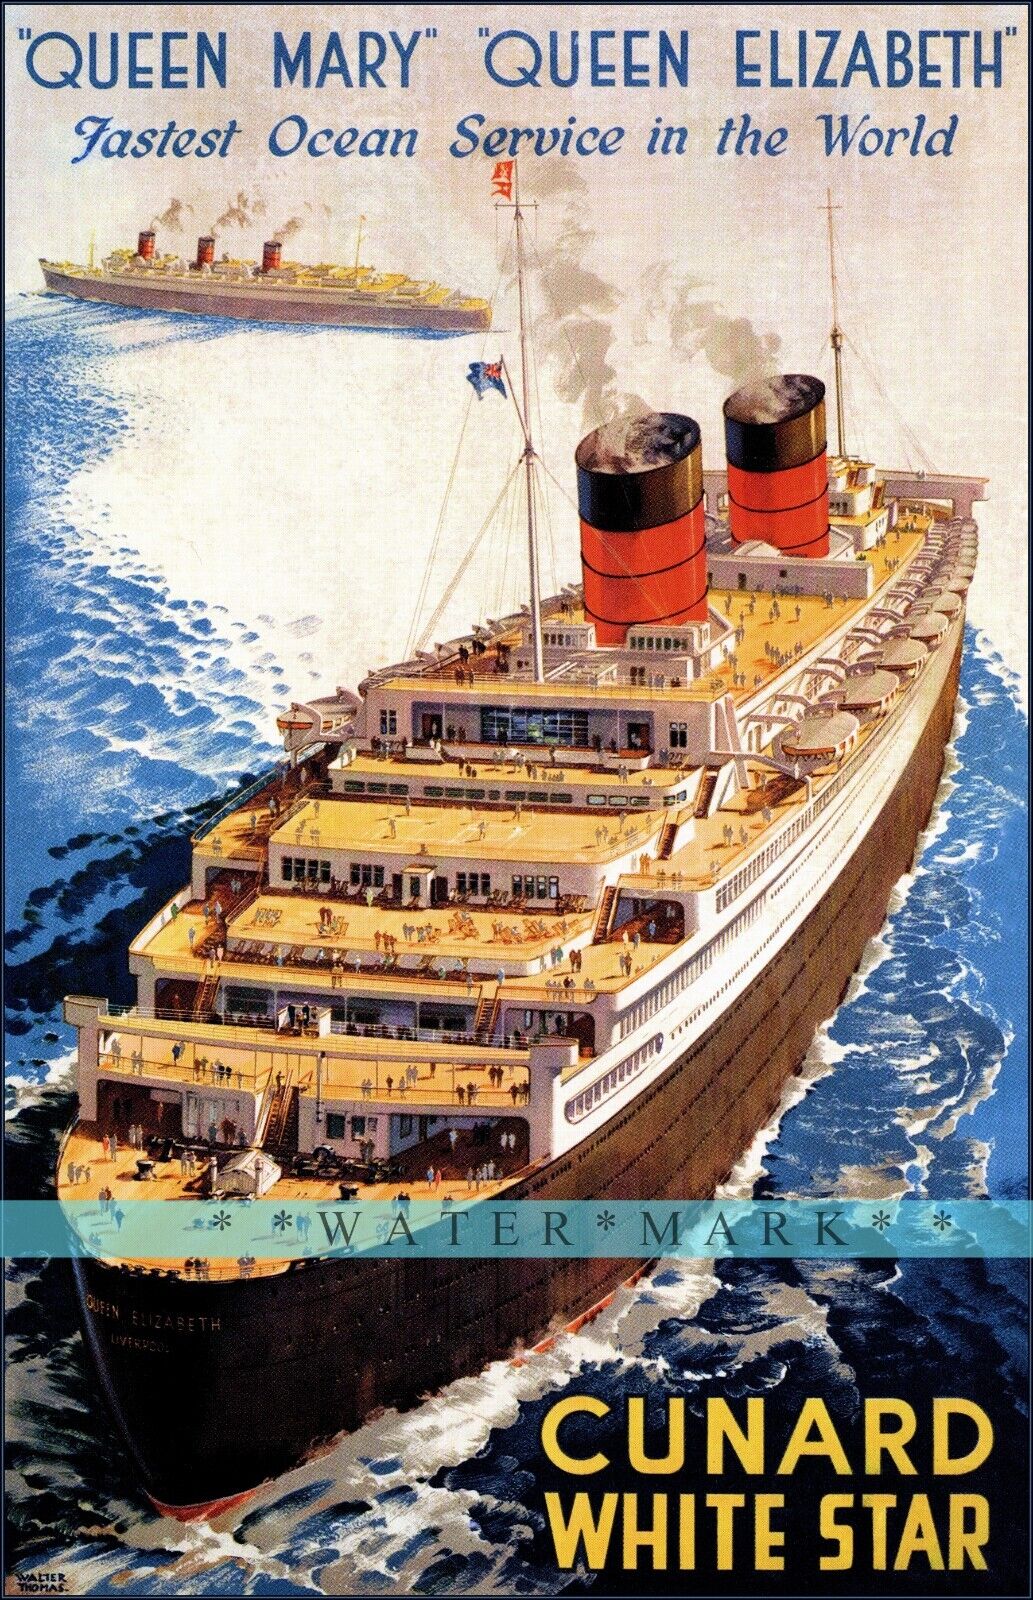 Cunard White Star 1947 Ocean Liners Vintage Poster Print Retro Style Travel Art